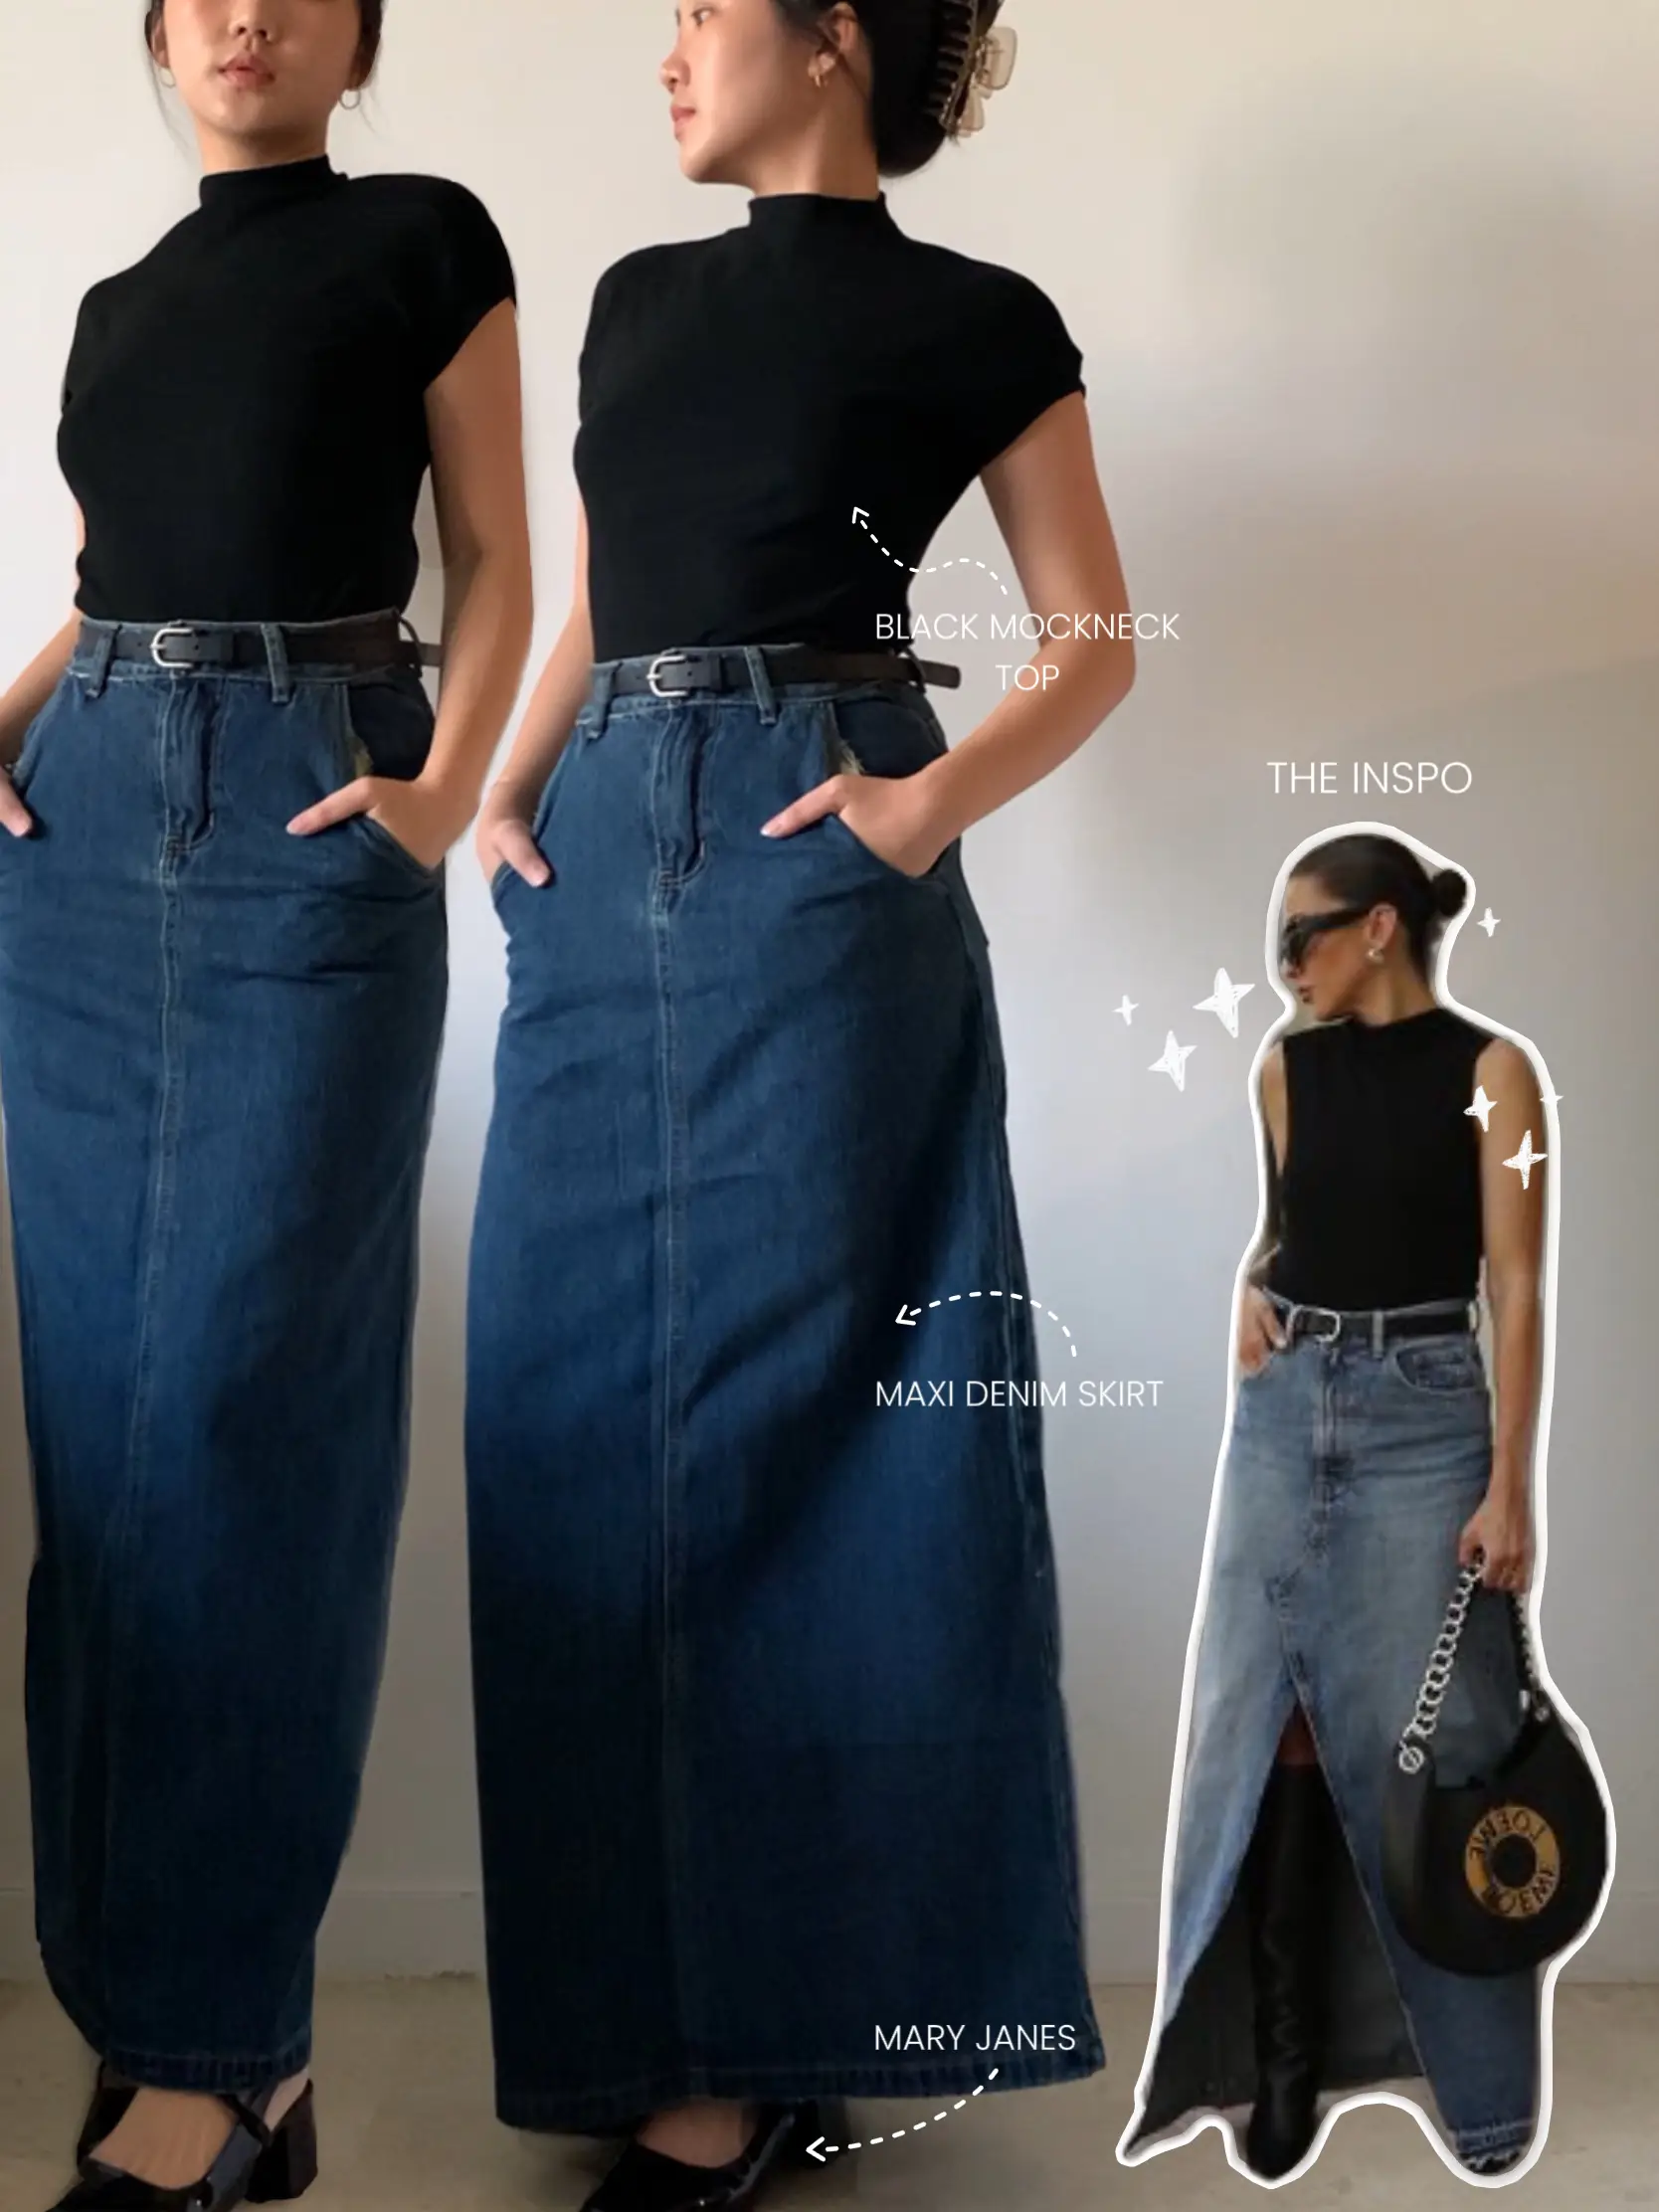 Stylish & effortless looks with Maxi denim skirt 🖤 | Gallery